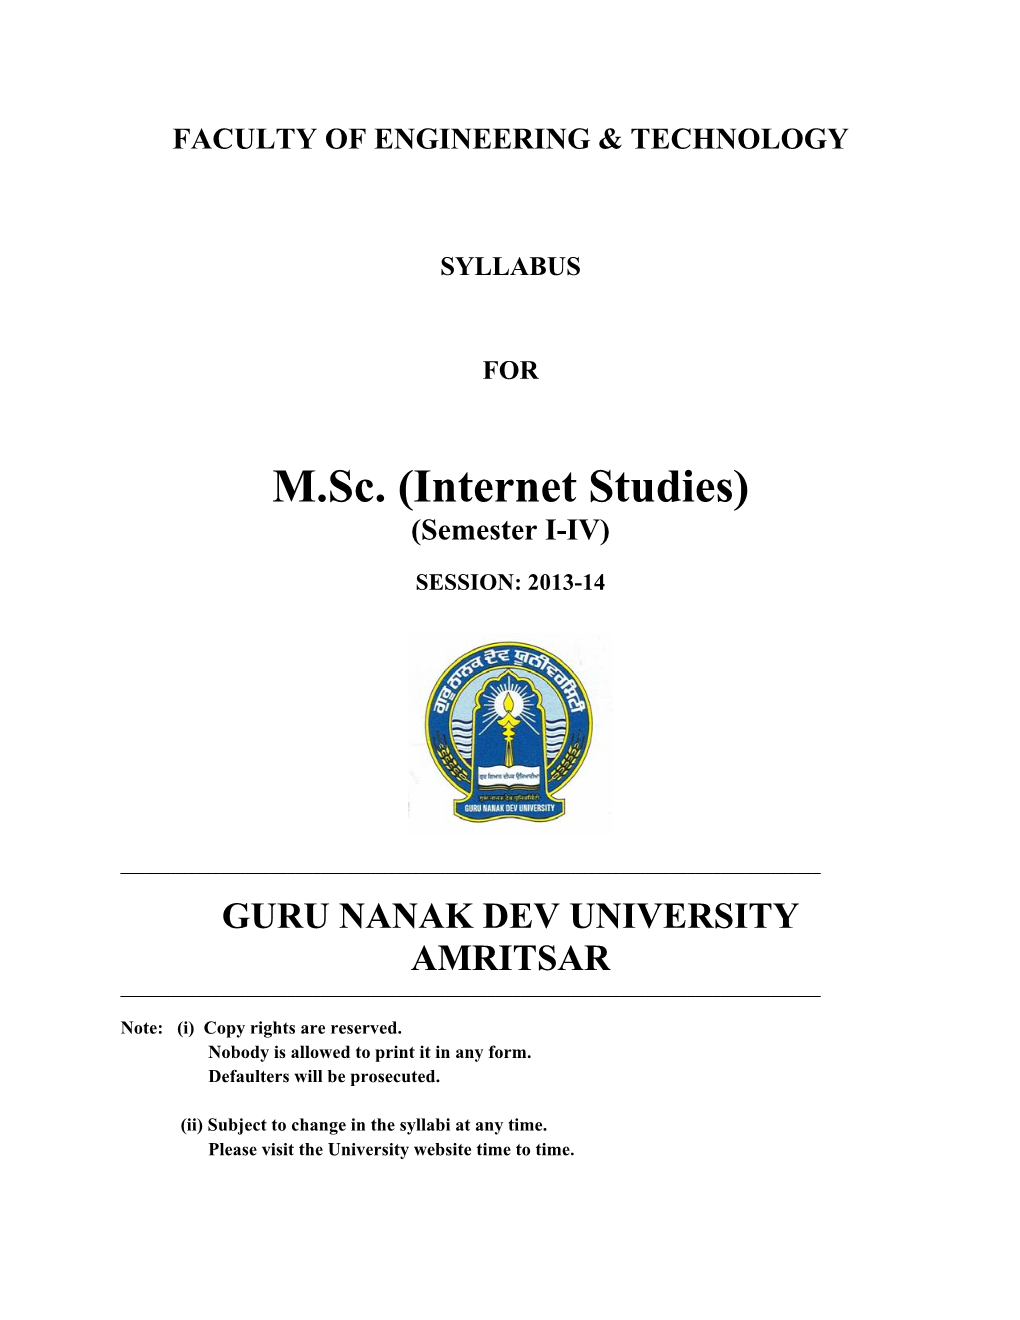 M.Sc. (Internet Studies) (Semester I-IV)